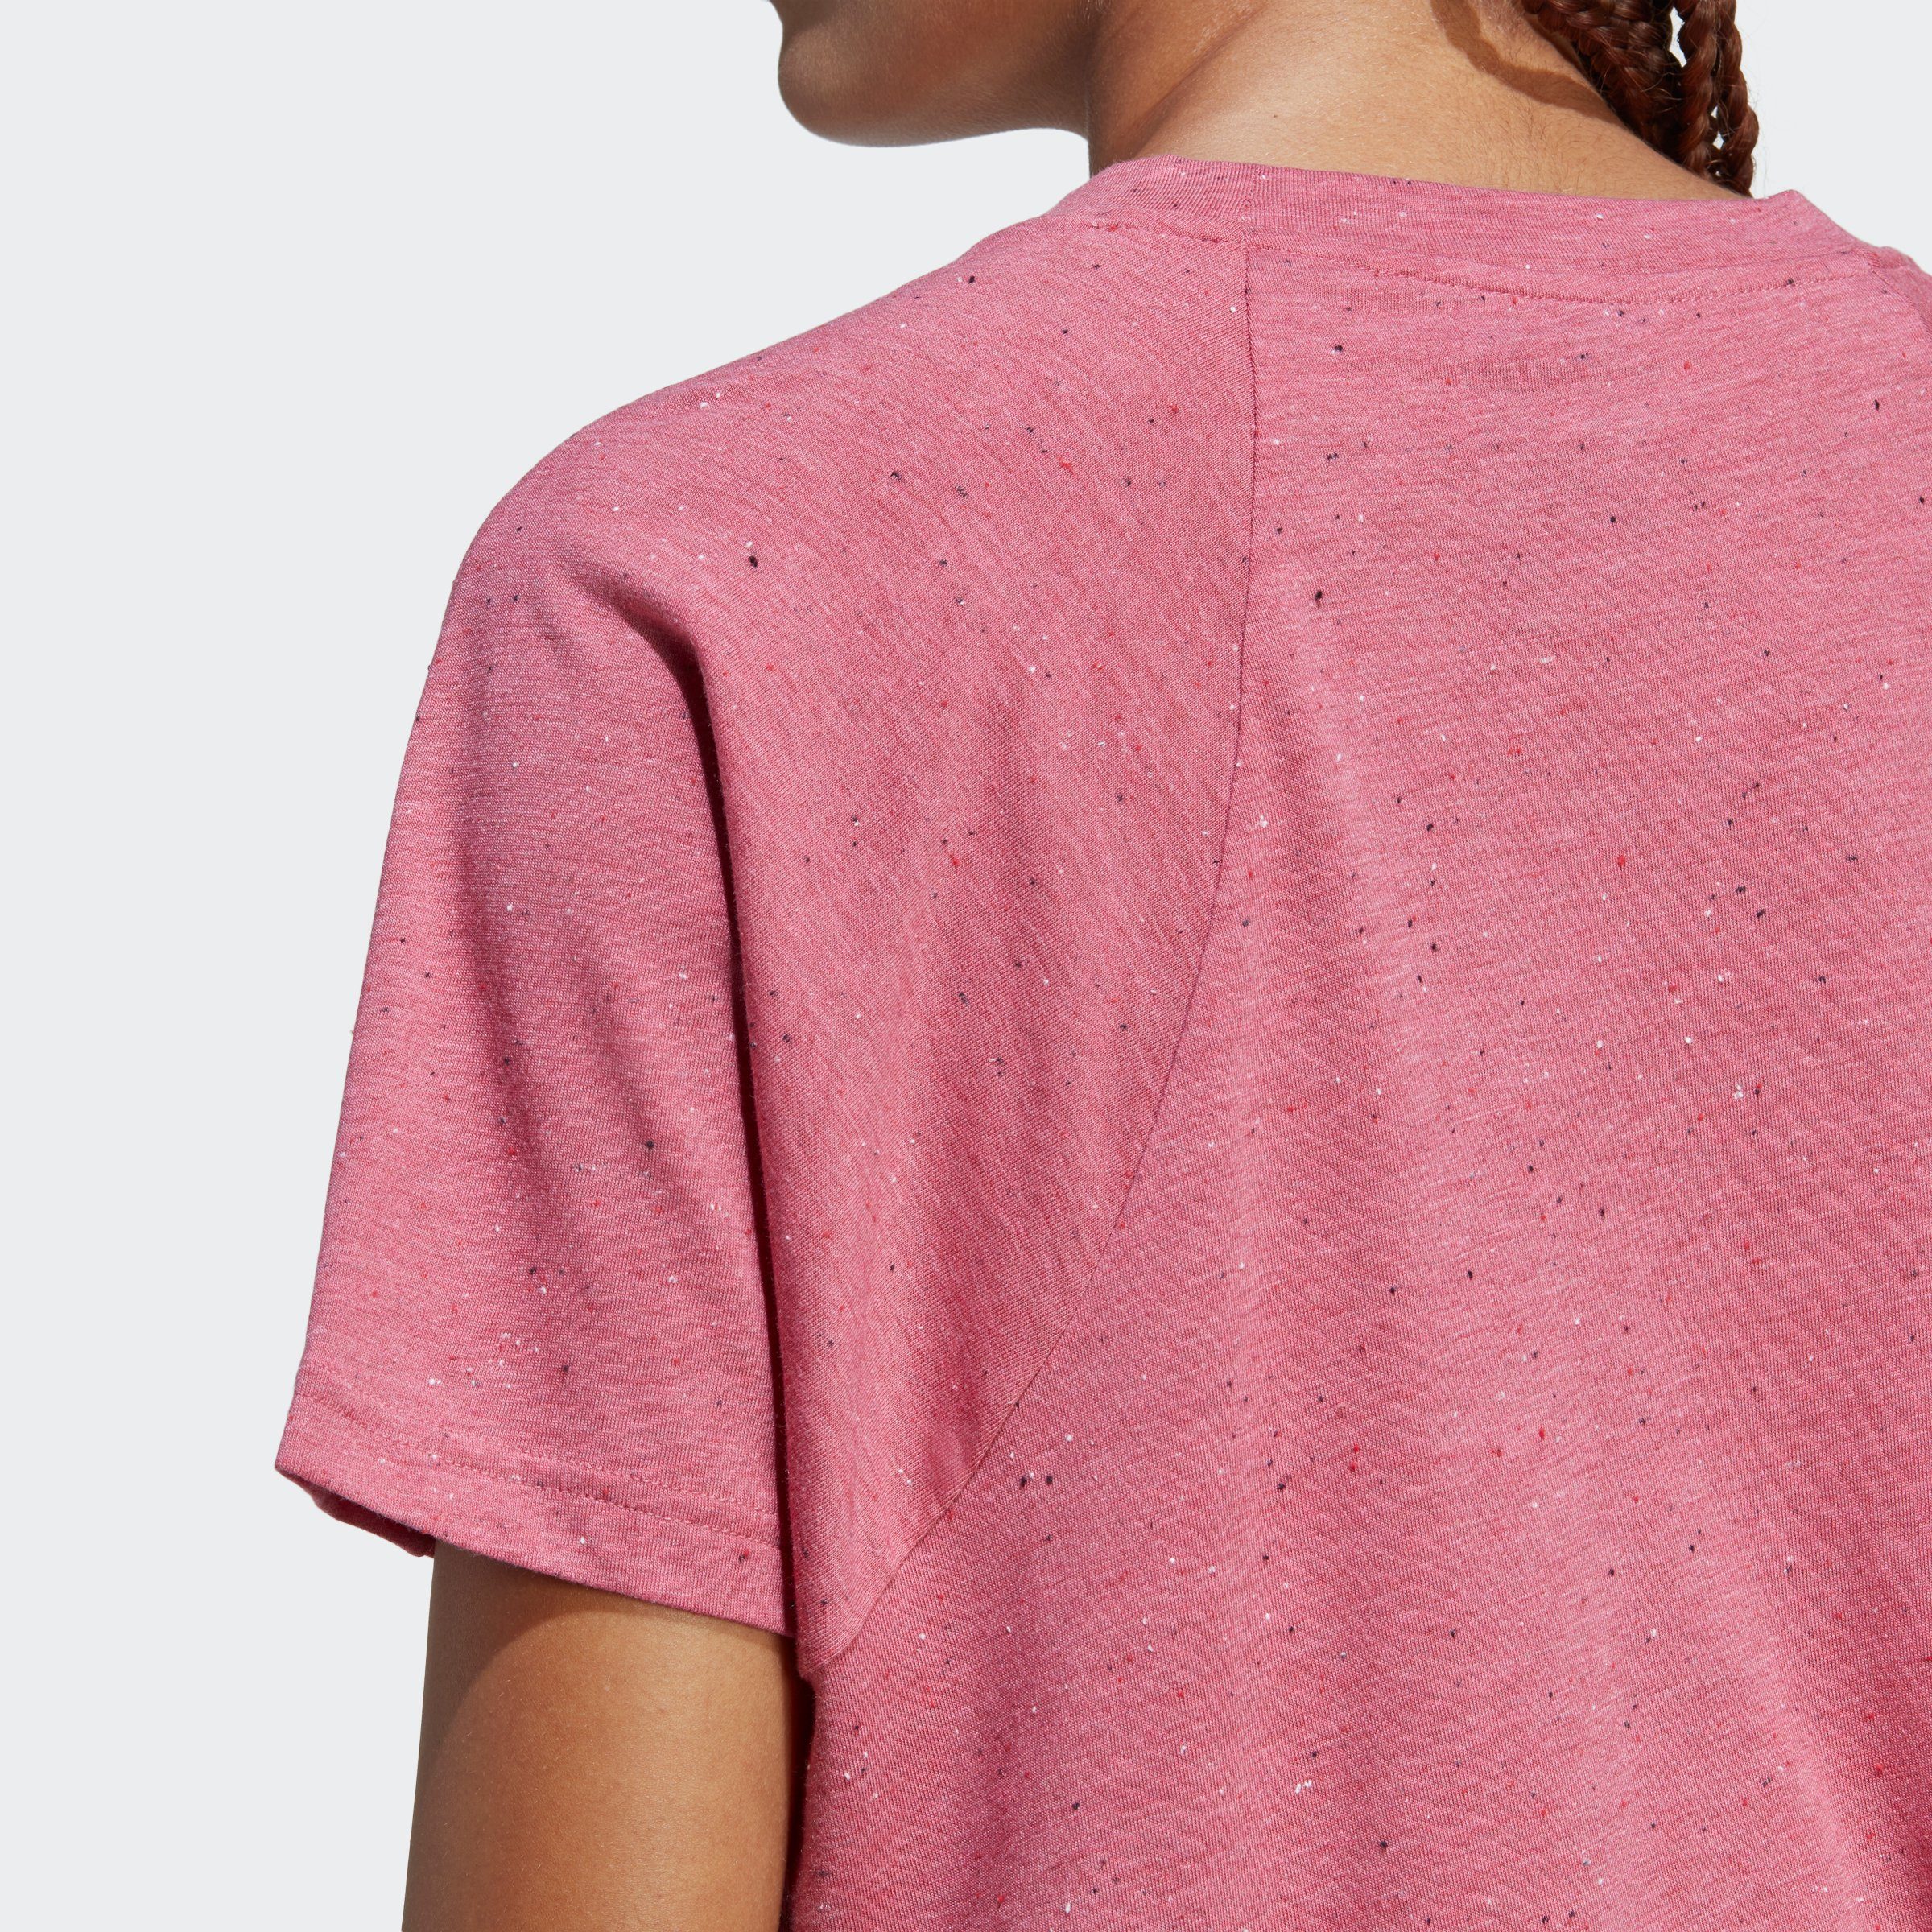 adidas Sportswear T-Shirt FUTURE ICONS Mel. WINNERS / White Strata Pink